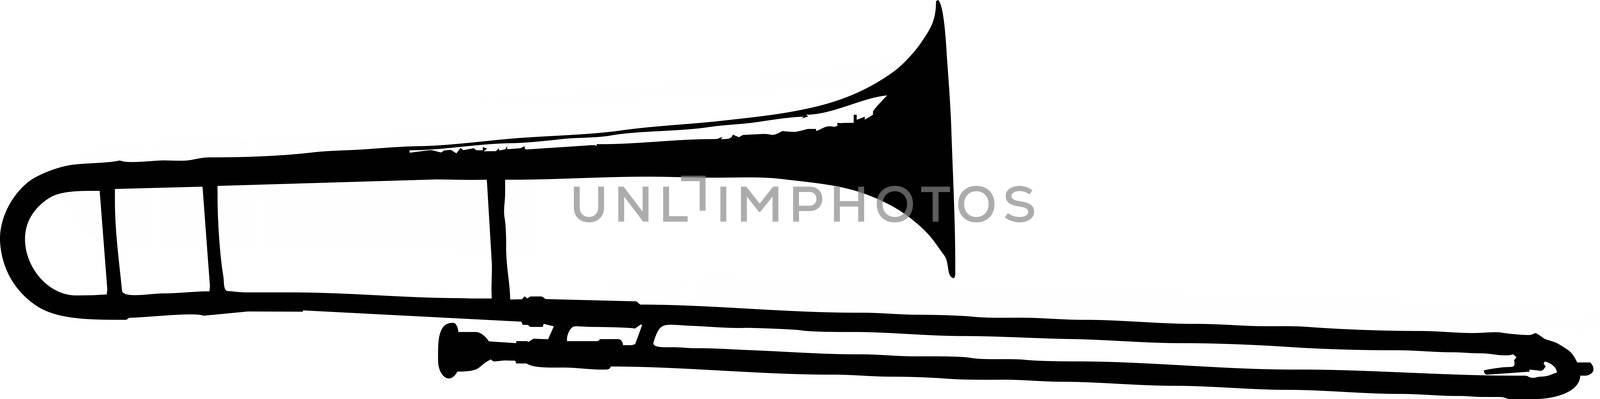 trombone silhouette by paolo77